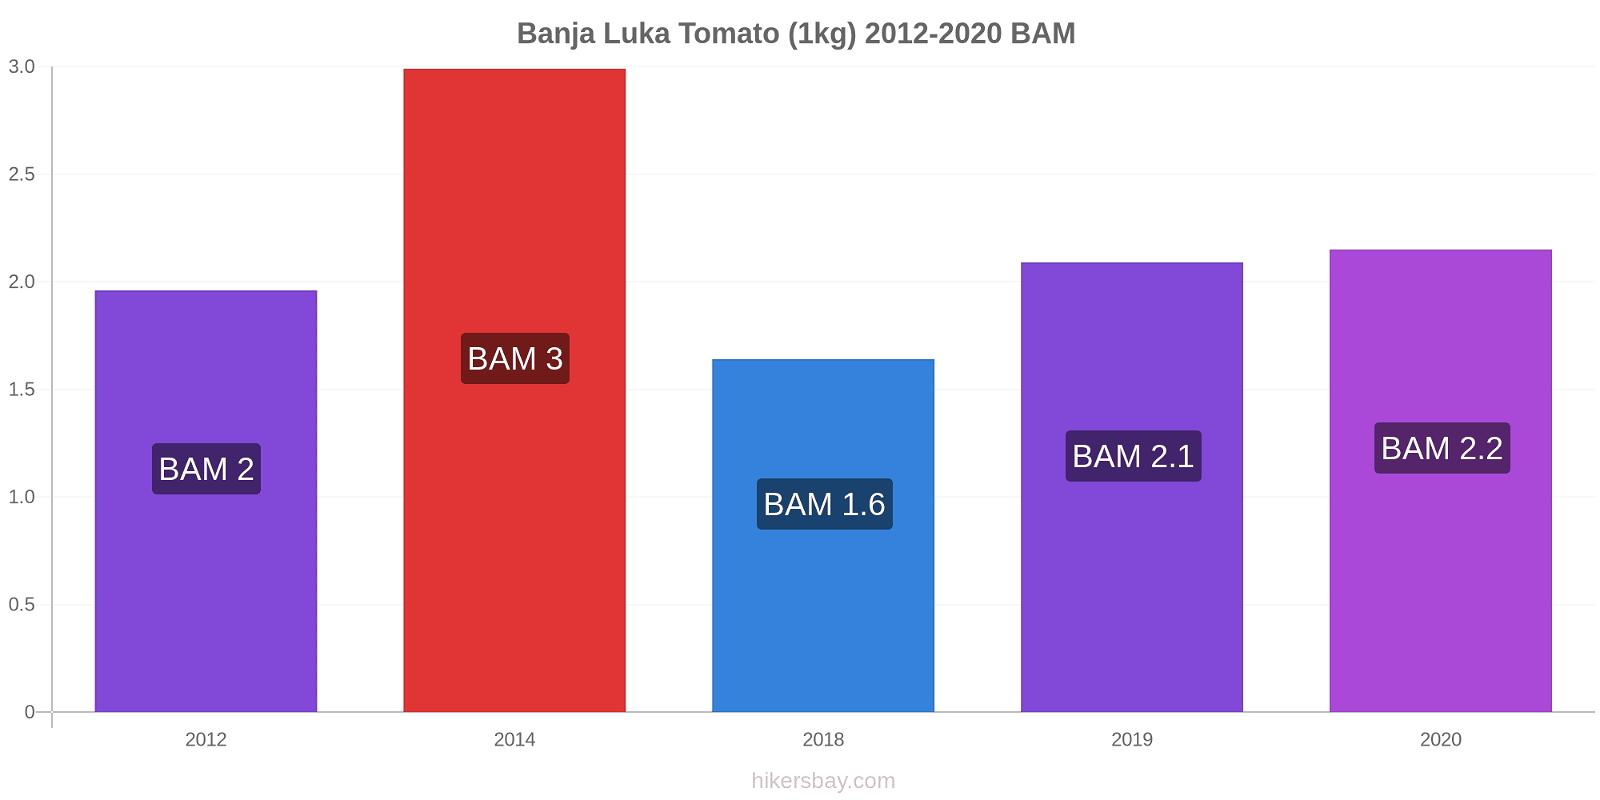 Banja Luka price changes Tomato (1kg) hikersbay.com